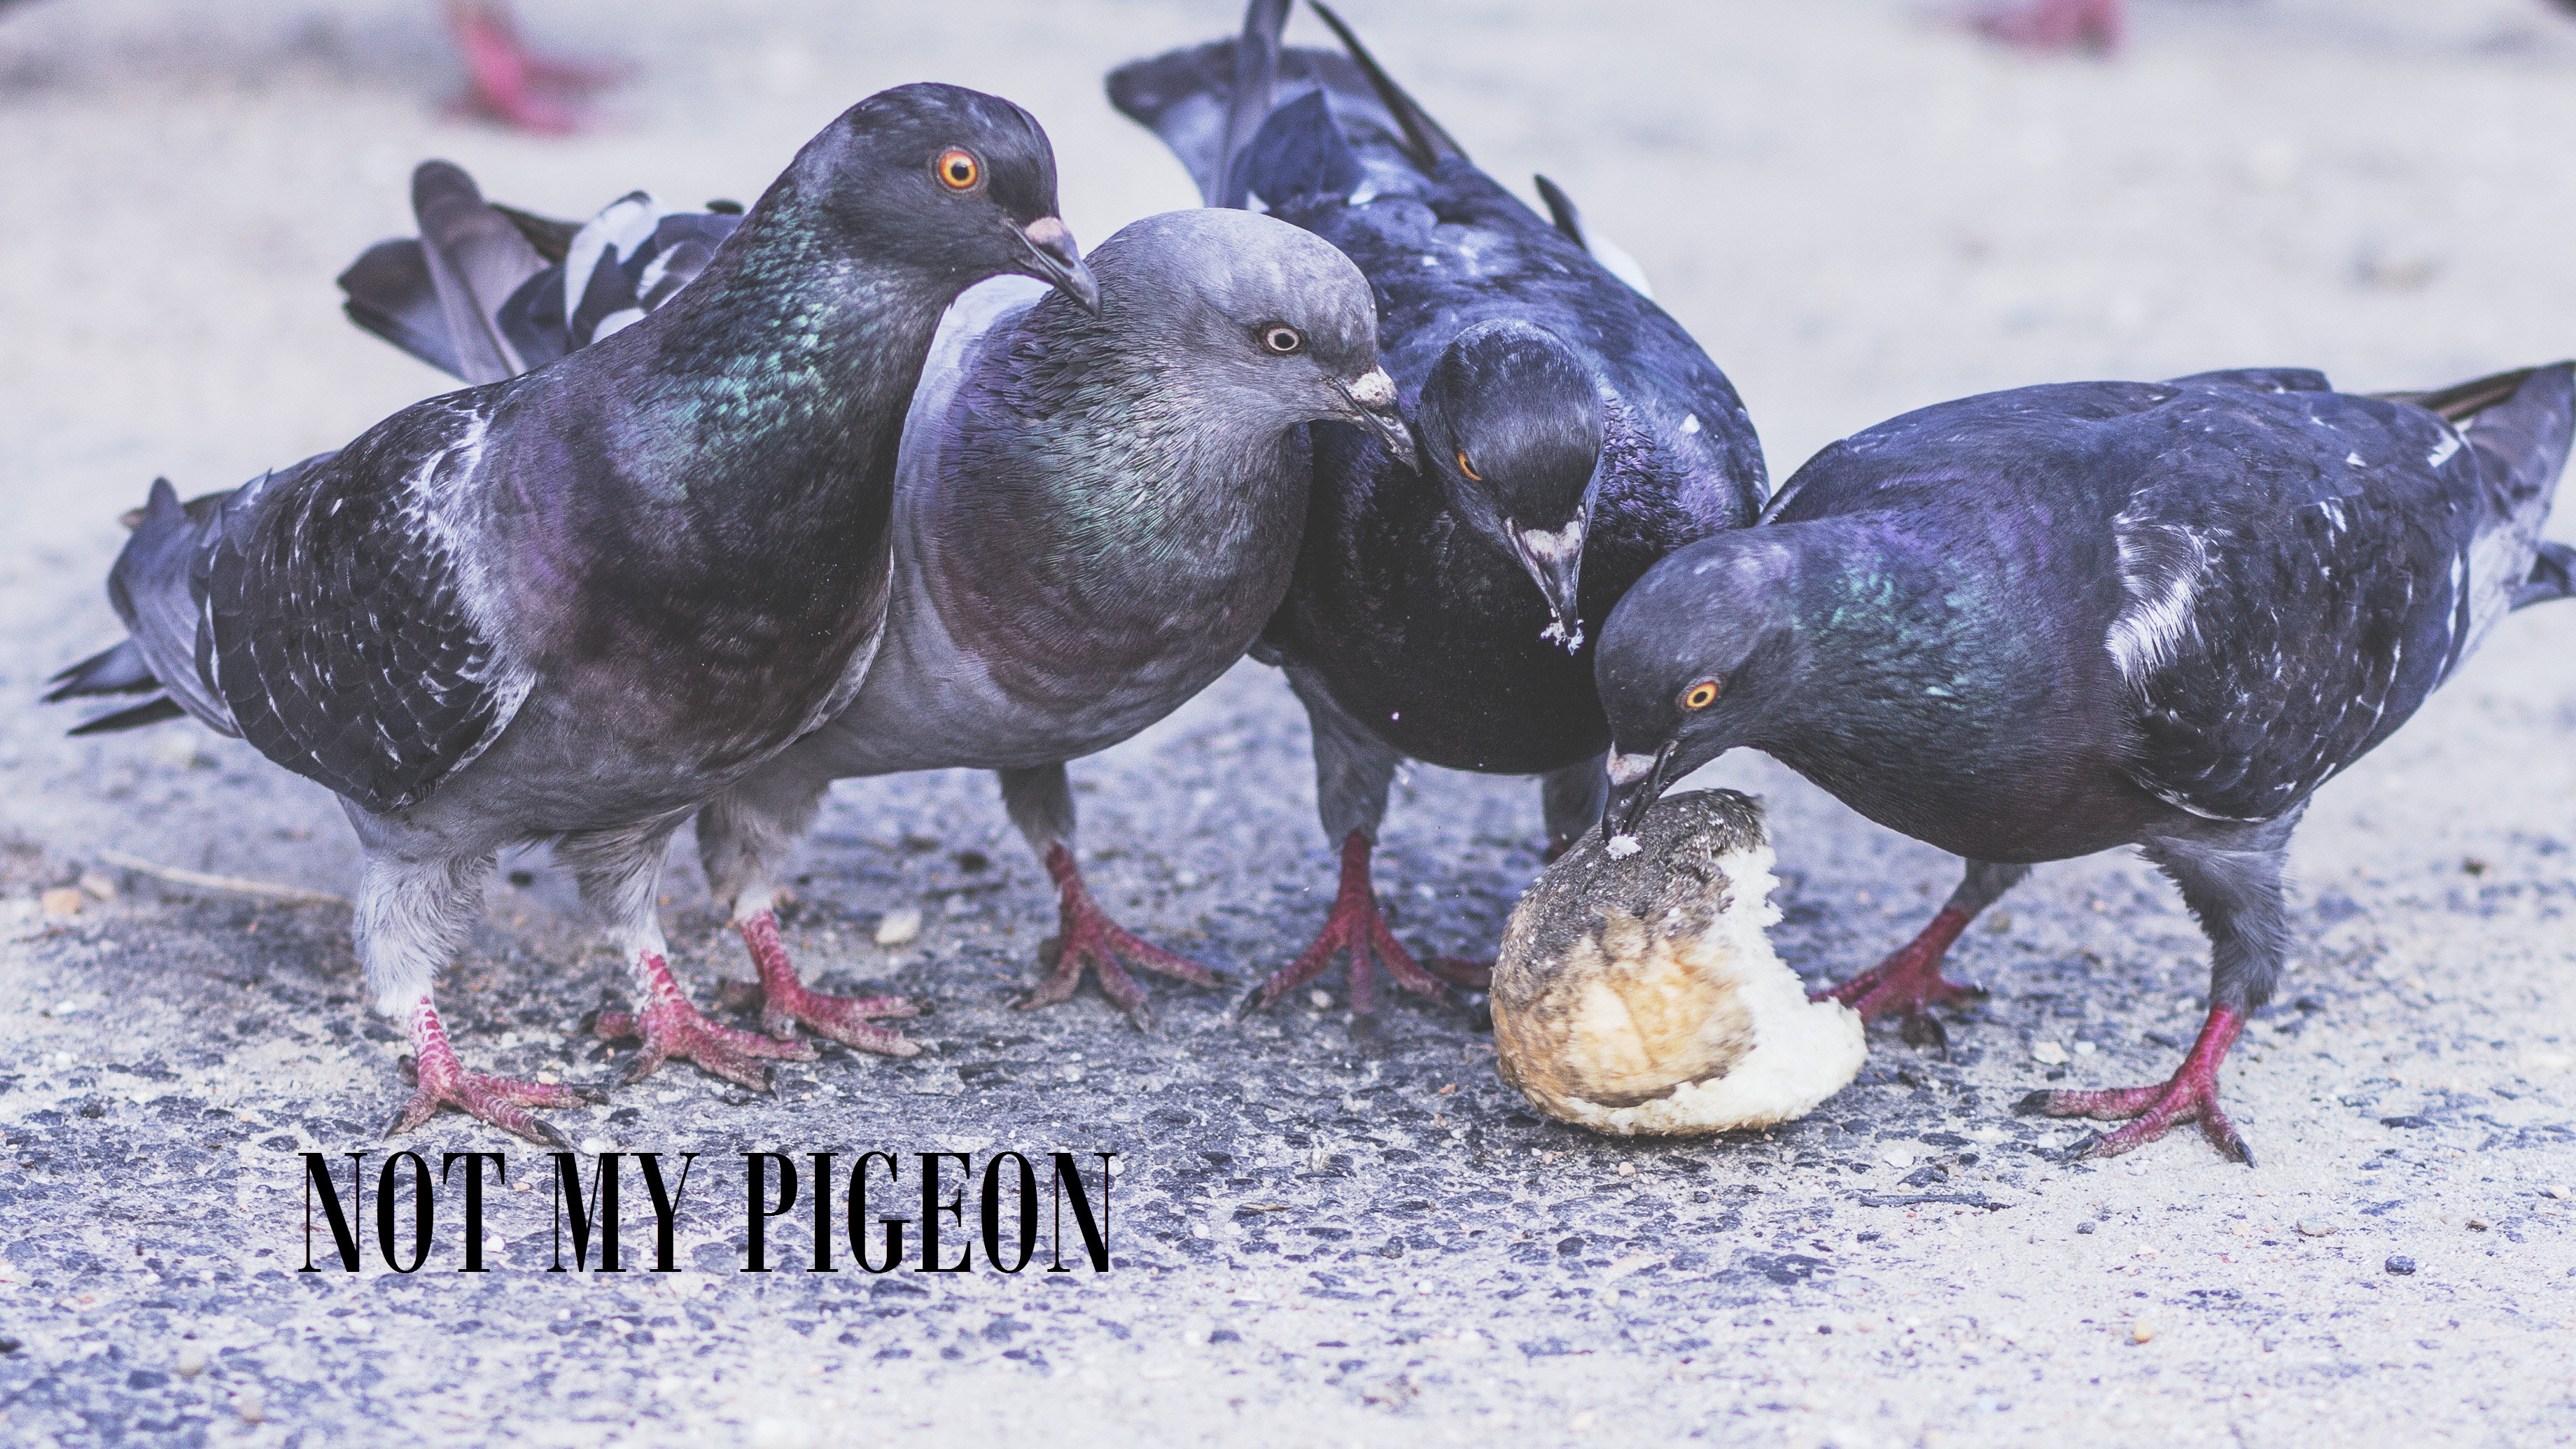 Not my pigeon